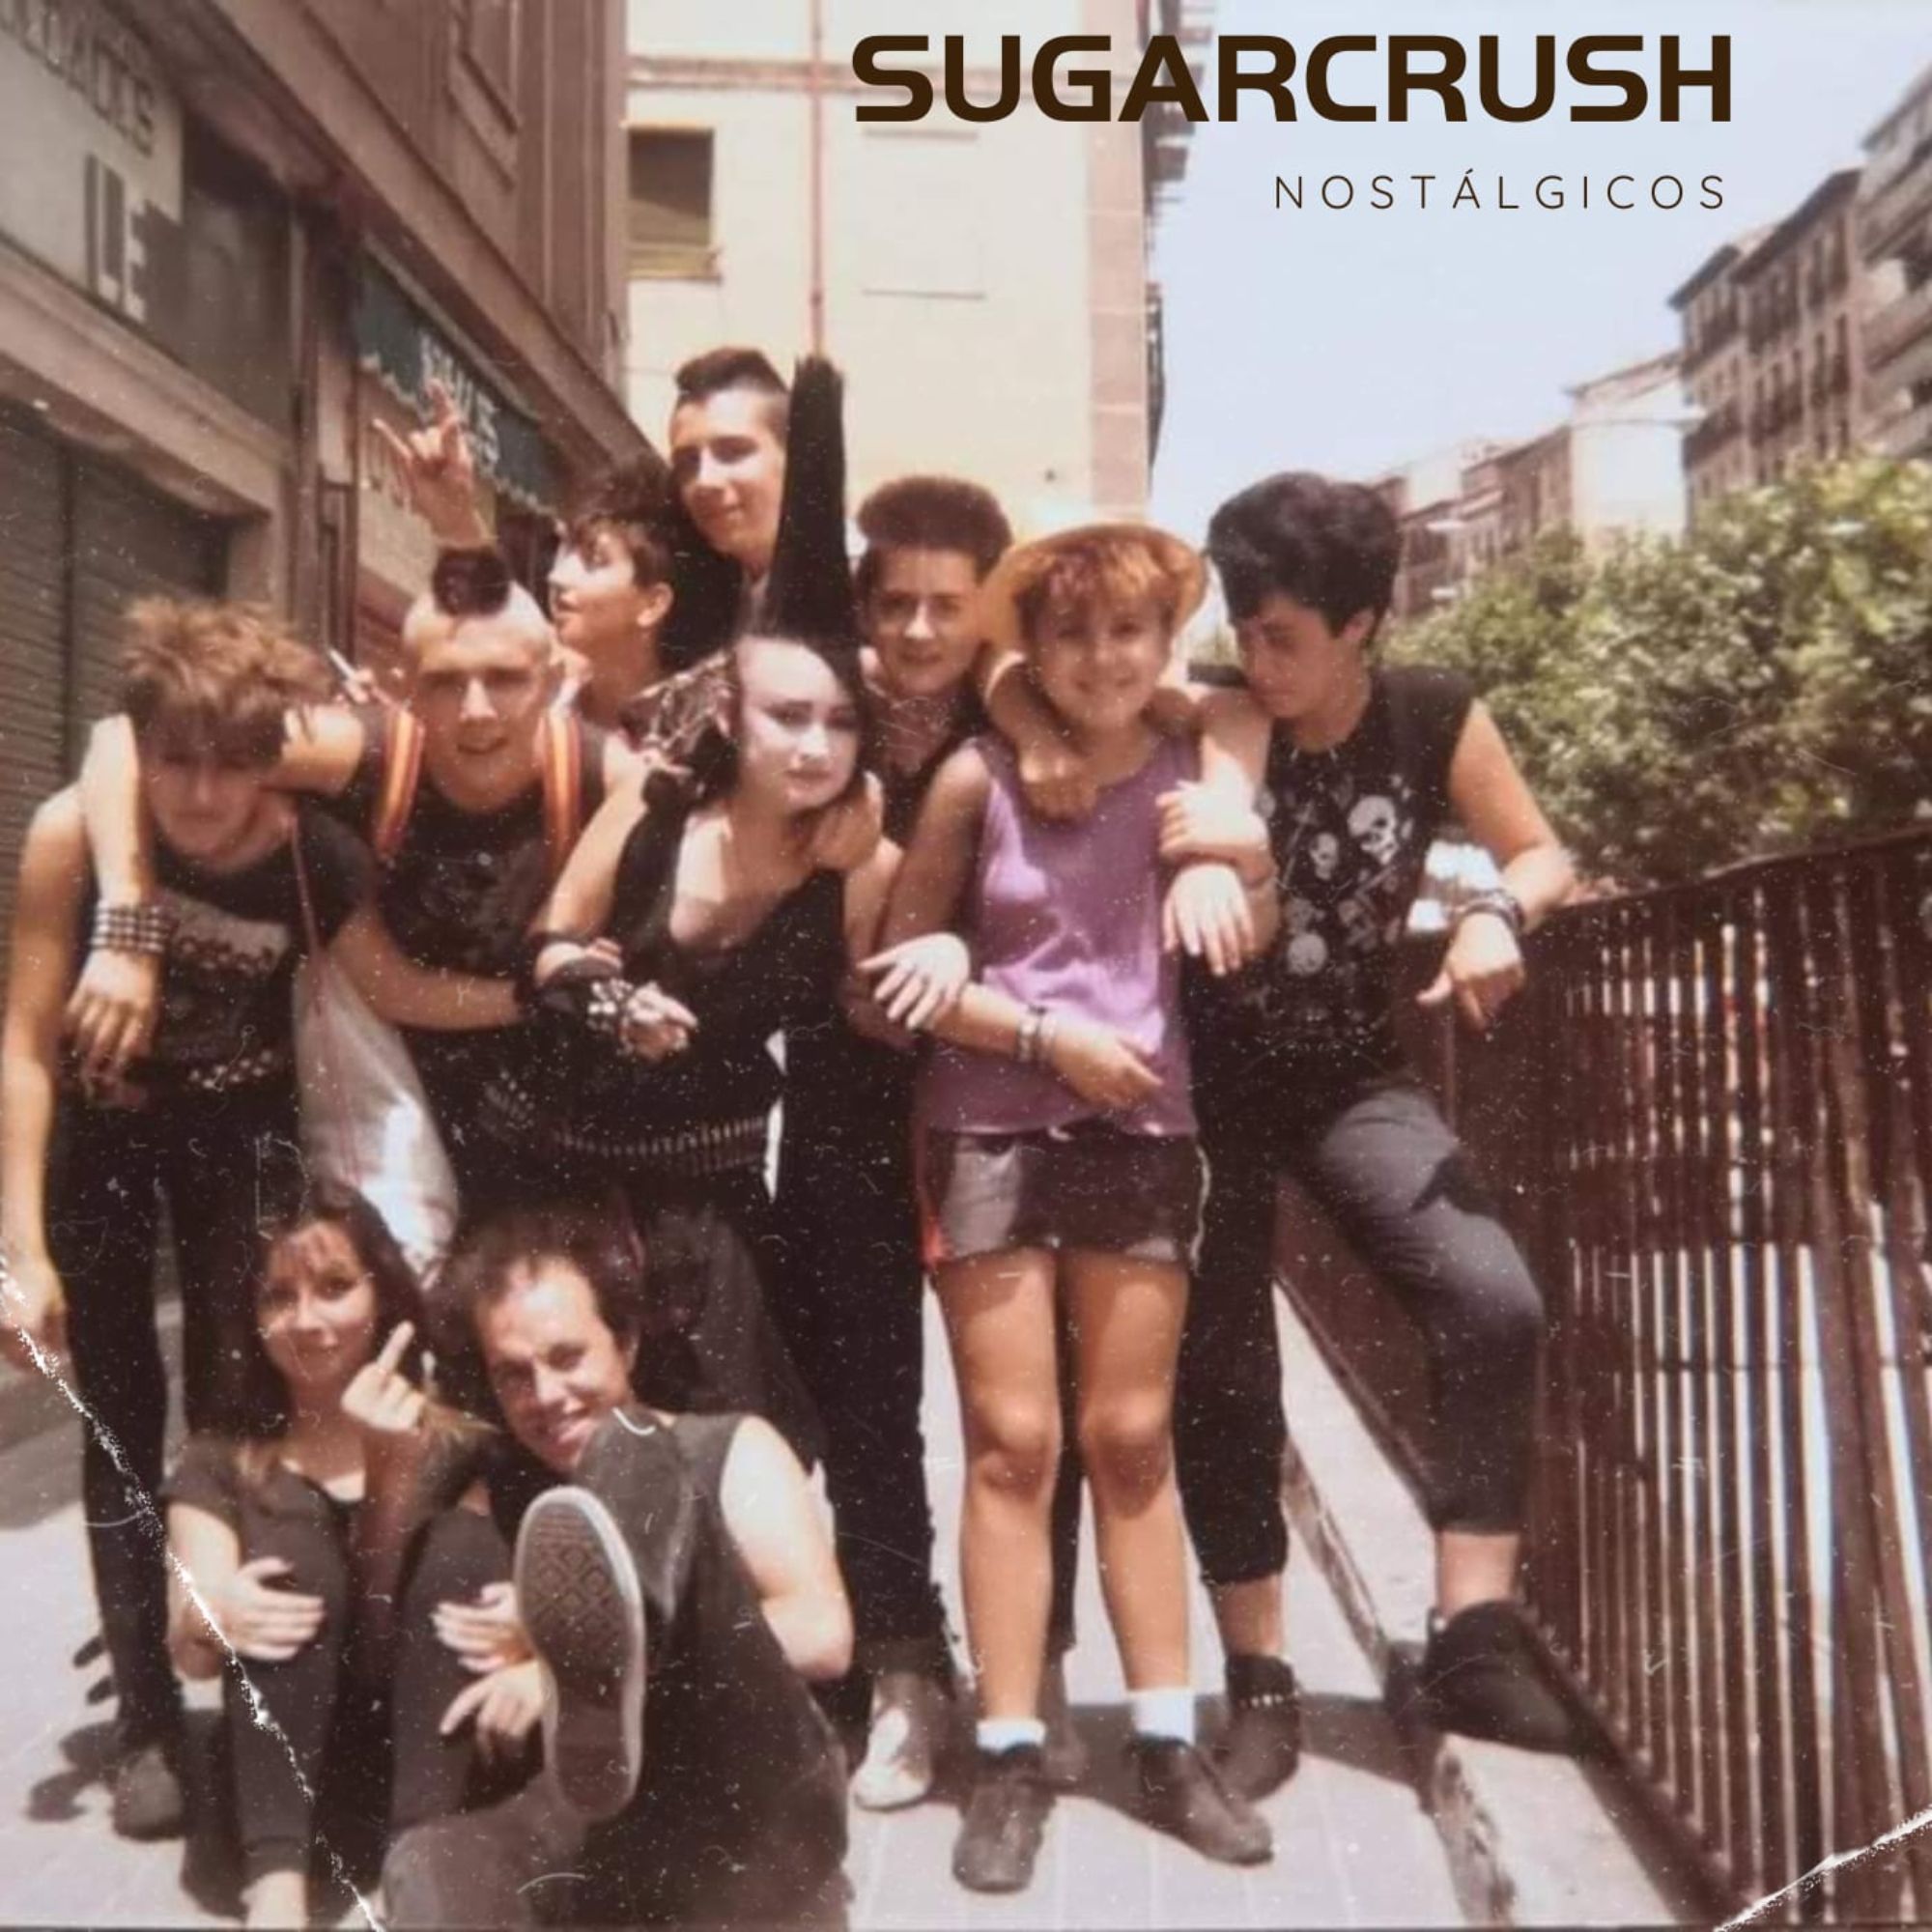 Portada de "Nostálgicos", el single de Sugarcrush